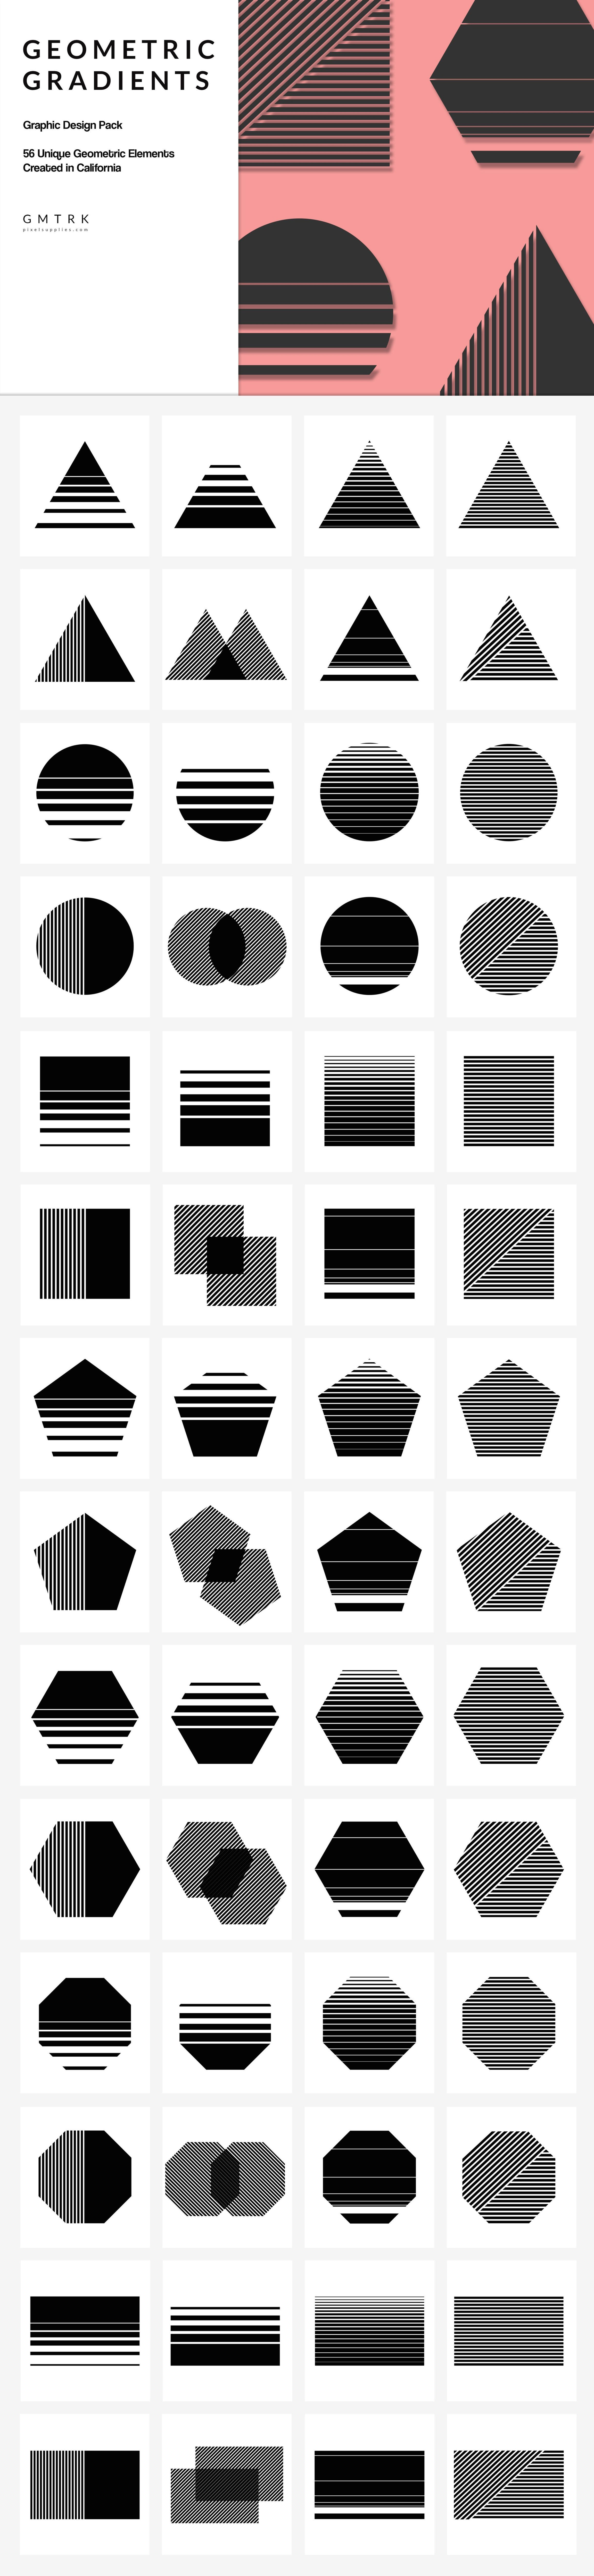 Geometric Gradients by Pixel Supplies on @Creative Market